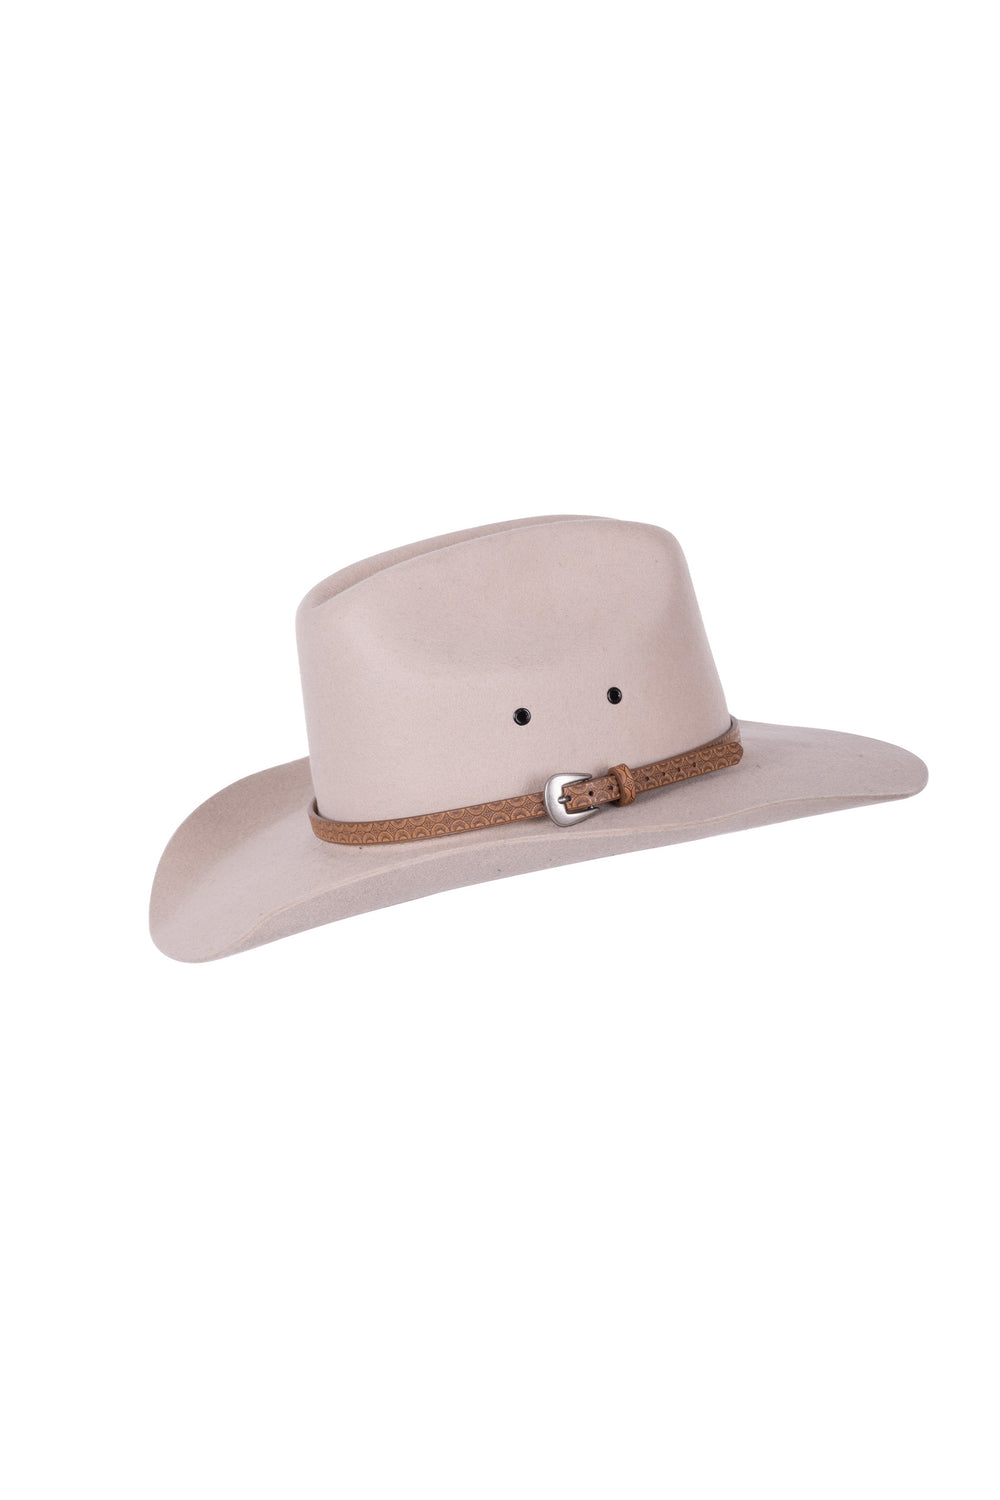 Pure Western - Terri Hat Band Tan